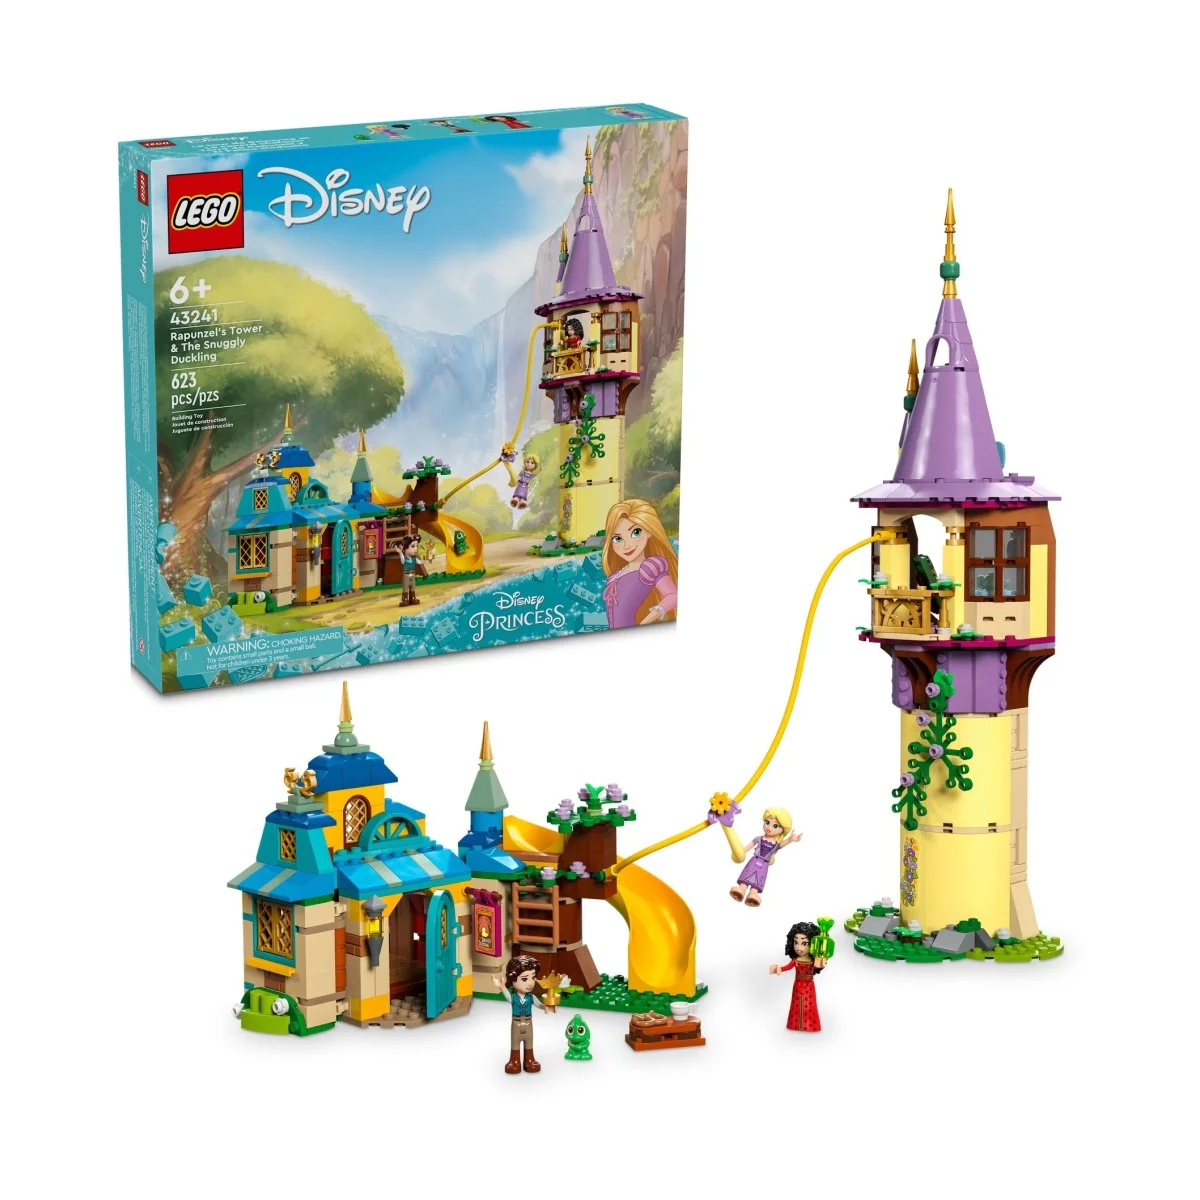 Конструктор Lego Disney Rapunzel's Tower & The Snuggly Duckling 43241, 623 детали lego музыкальная шкатулка рапунцель disney princess